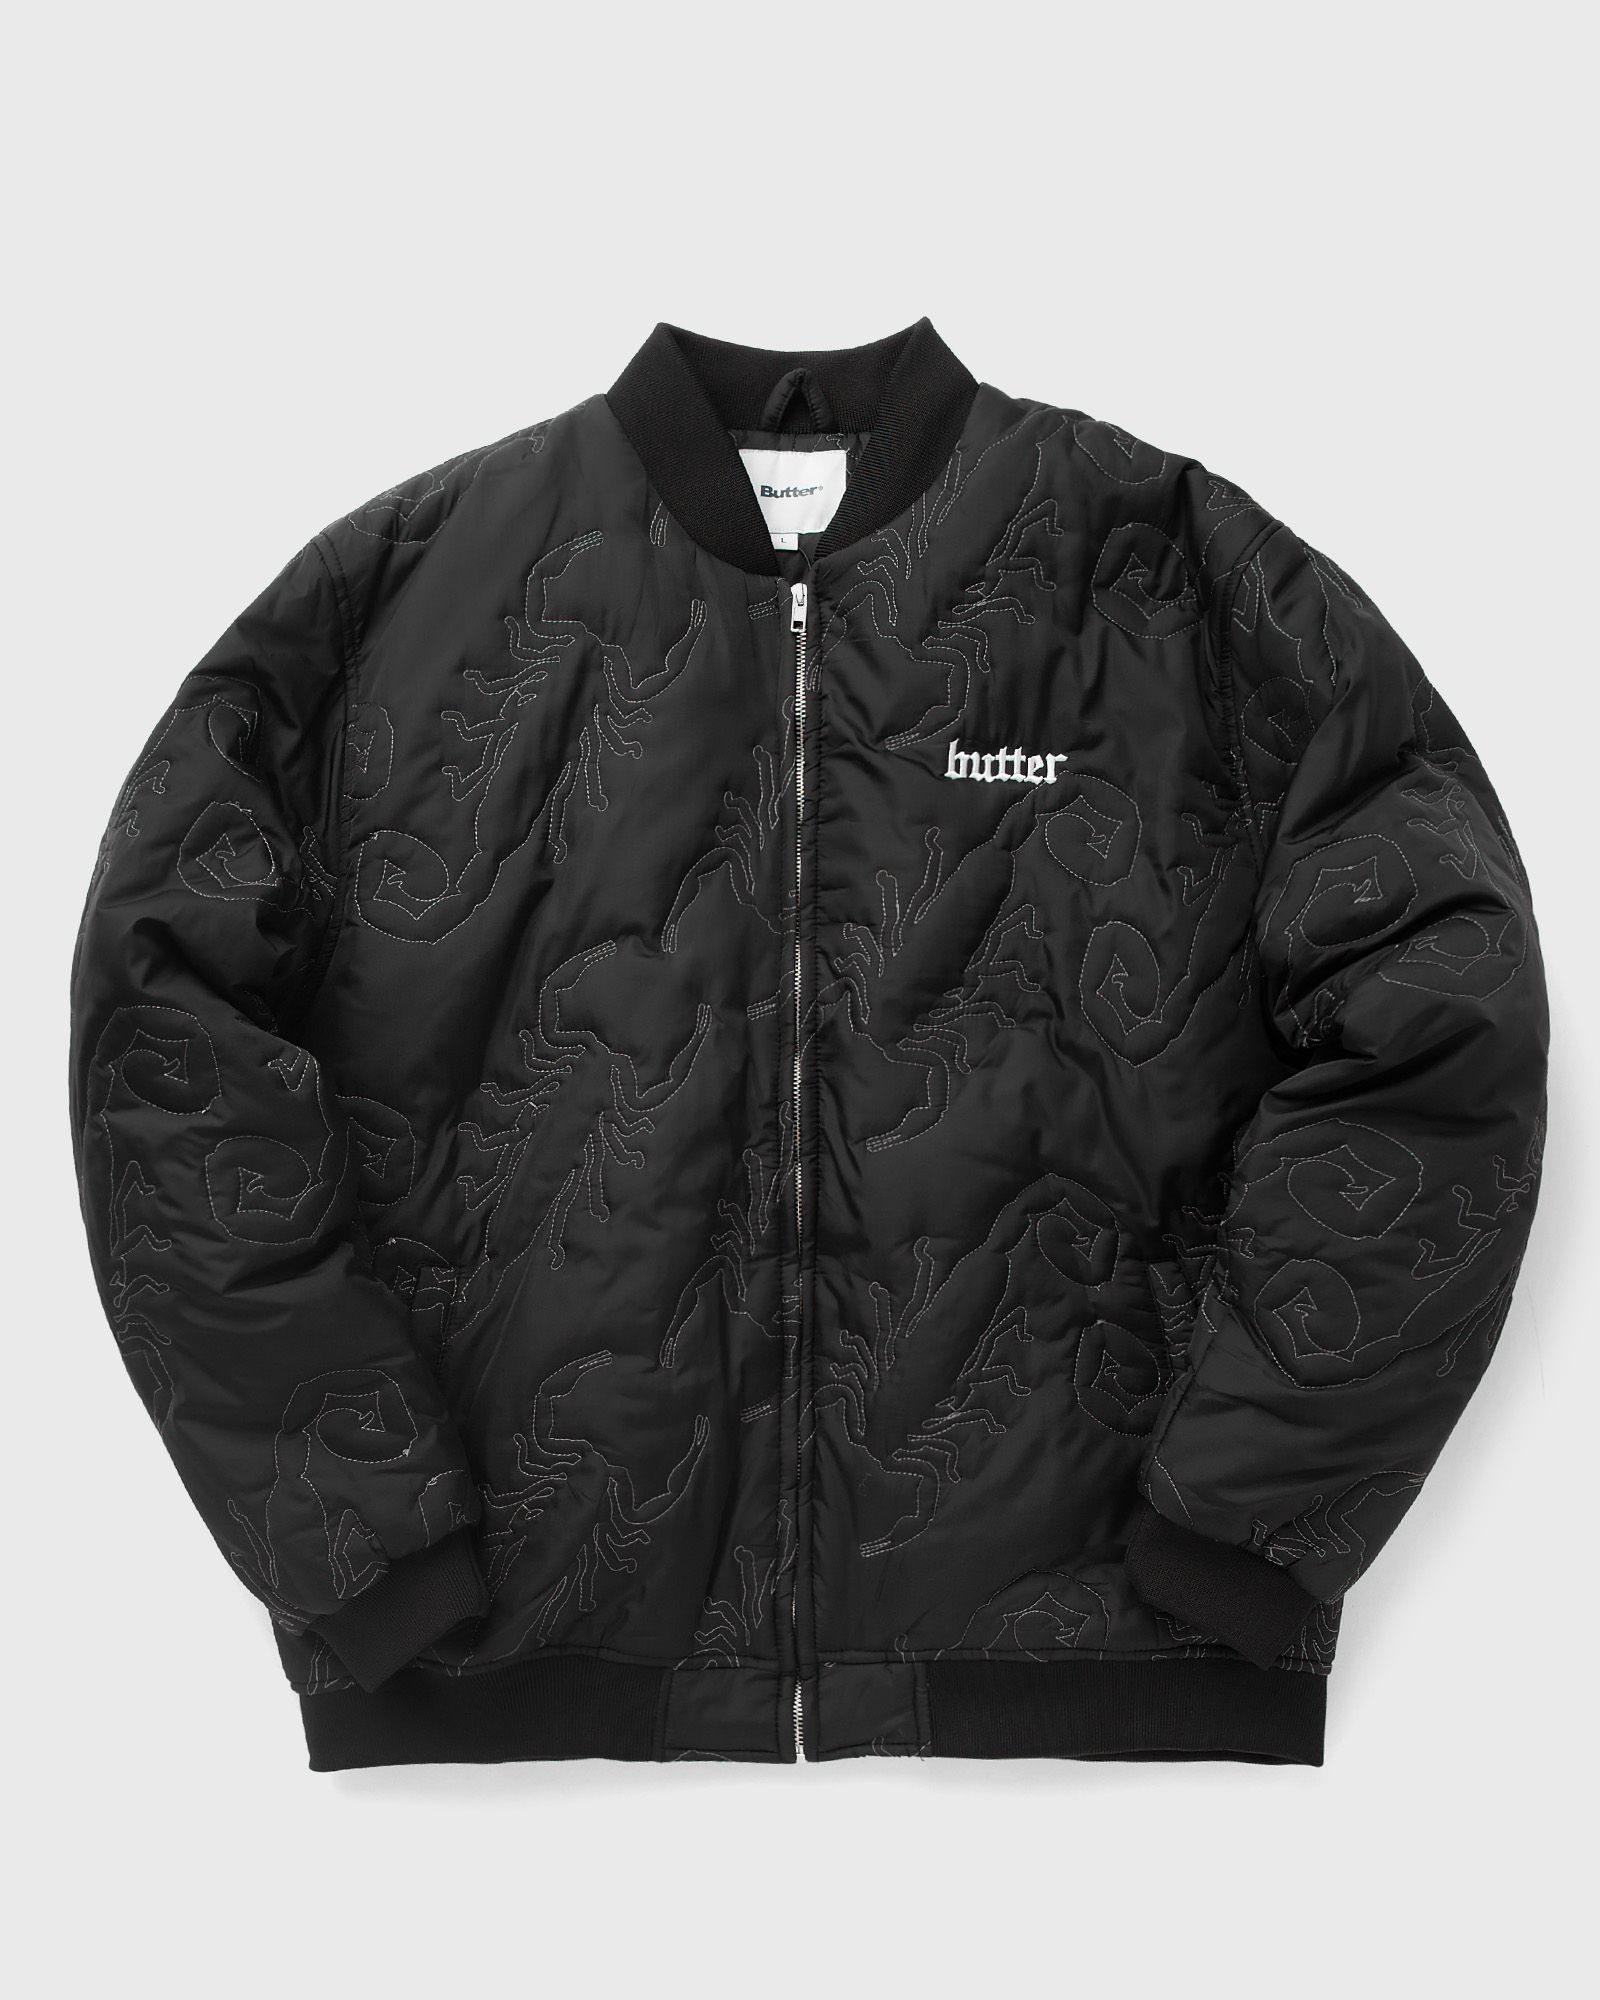 Butter Goods - scorpion jacket men bomber jackets black in größe:s